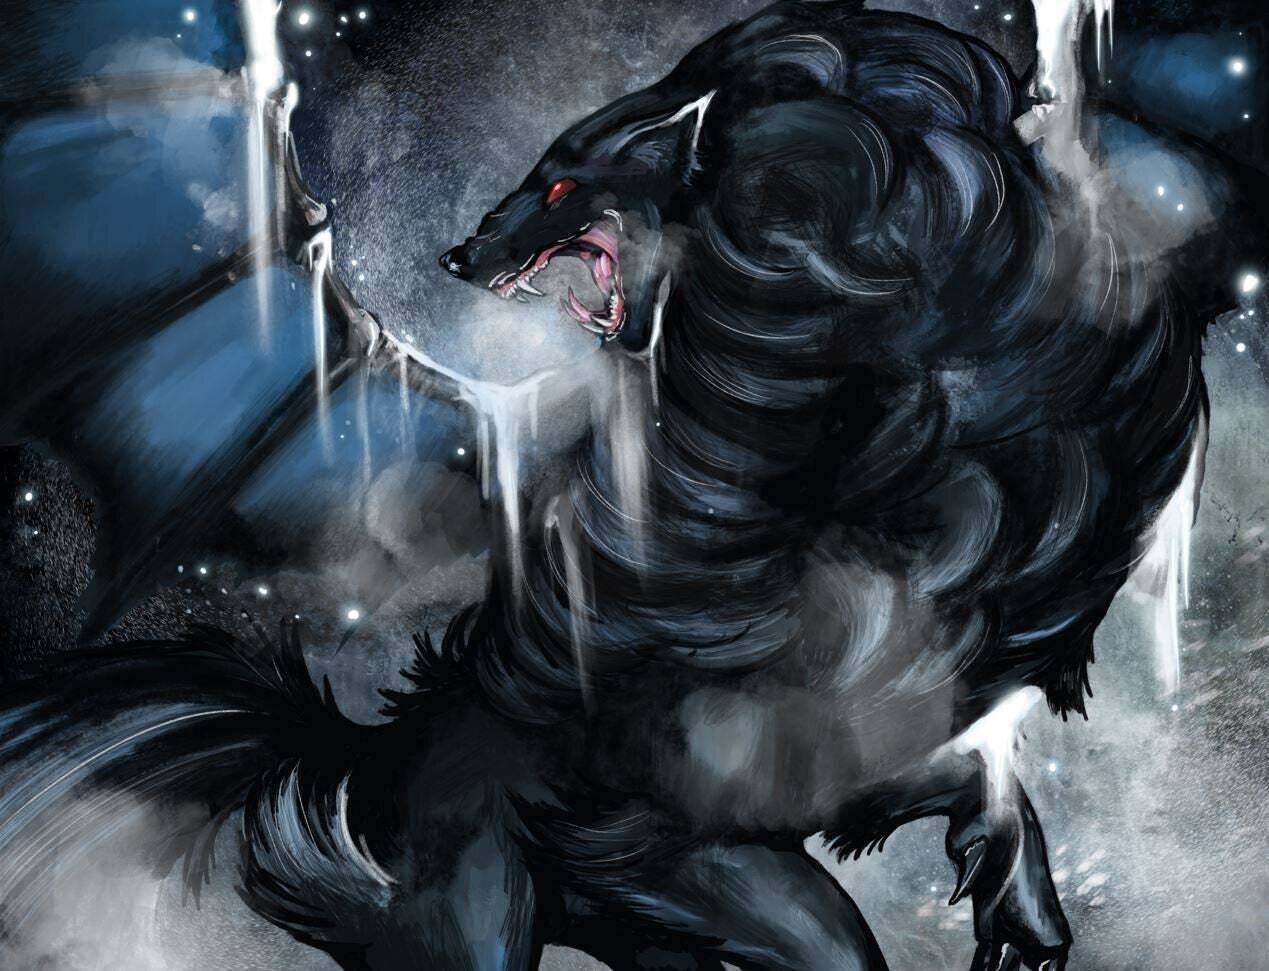 Fenrir ff Fan Art Poster landscape poster Final Fantasy fan art wolf fanart from Fenrir fan art New print ice and snow Demon dog